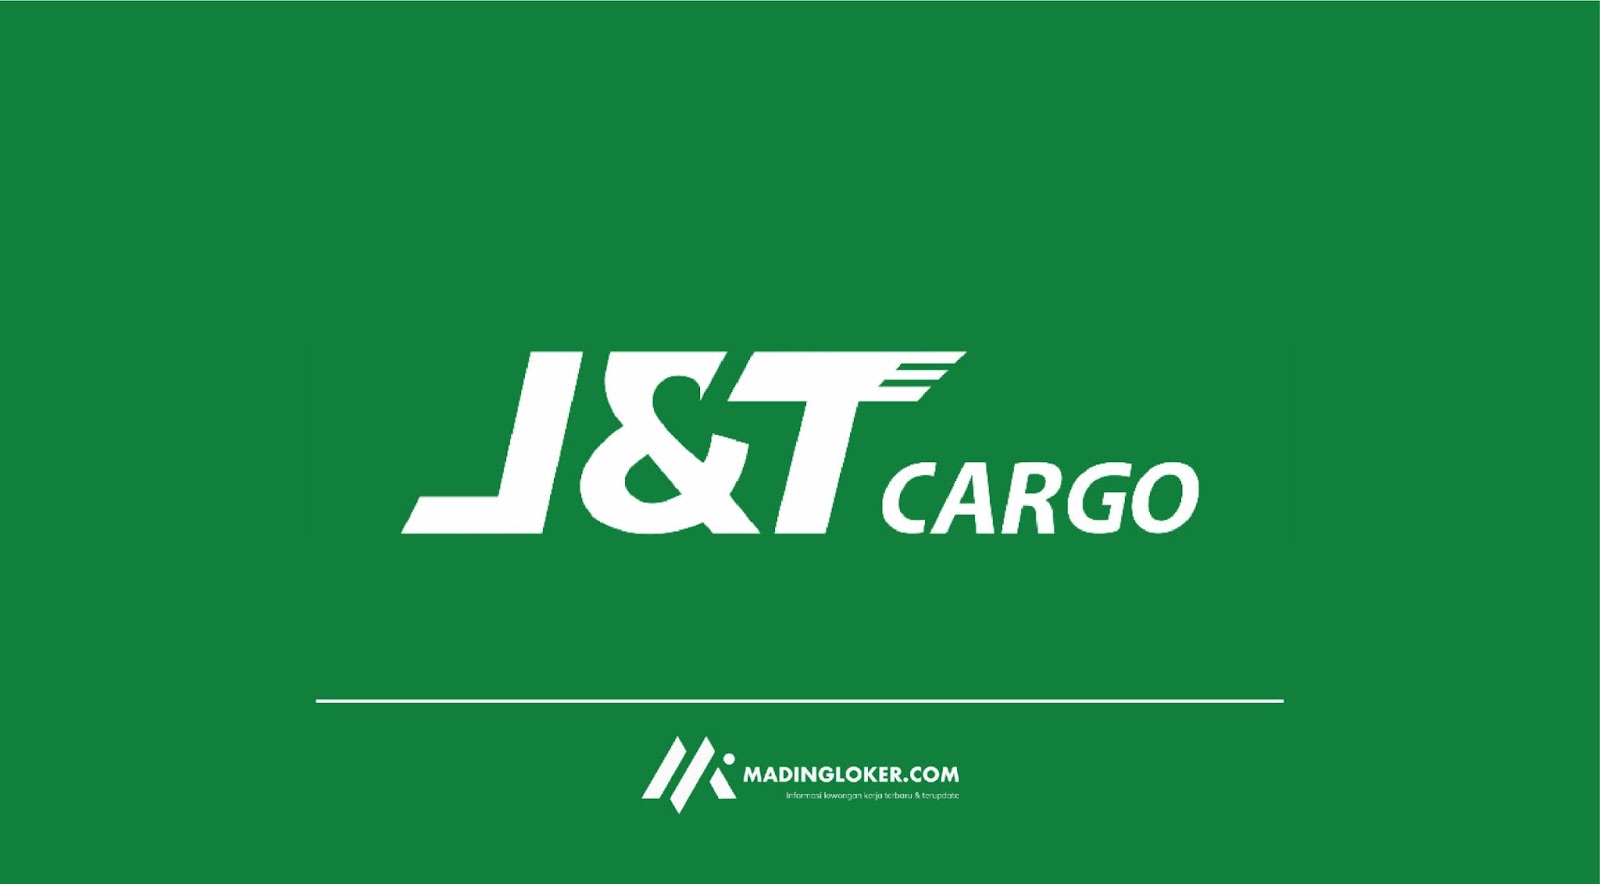 Rekomendasi Jasa Cargo di Bandung Paling Cepat, Layanan Express